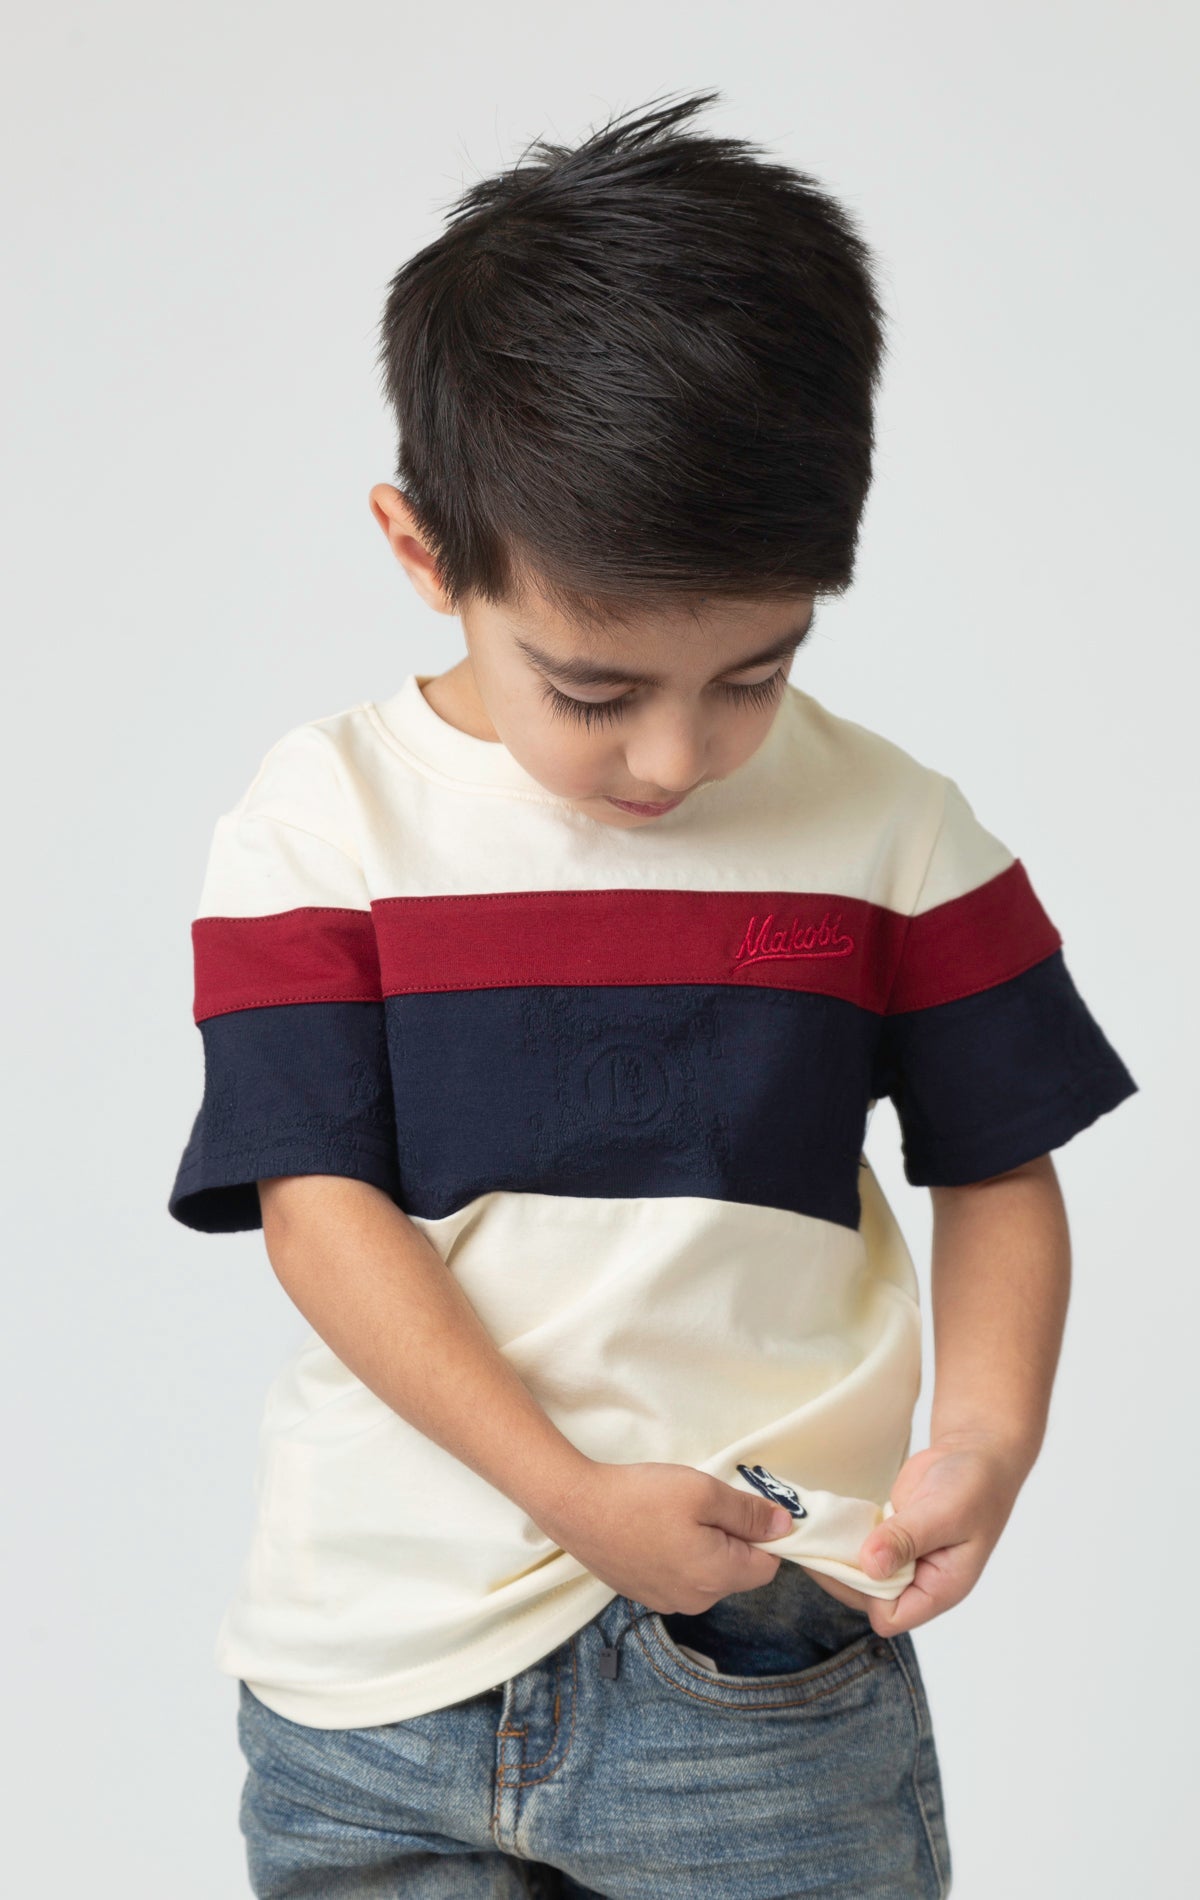 Monogram kid's t-shirt made from soft fabric